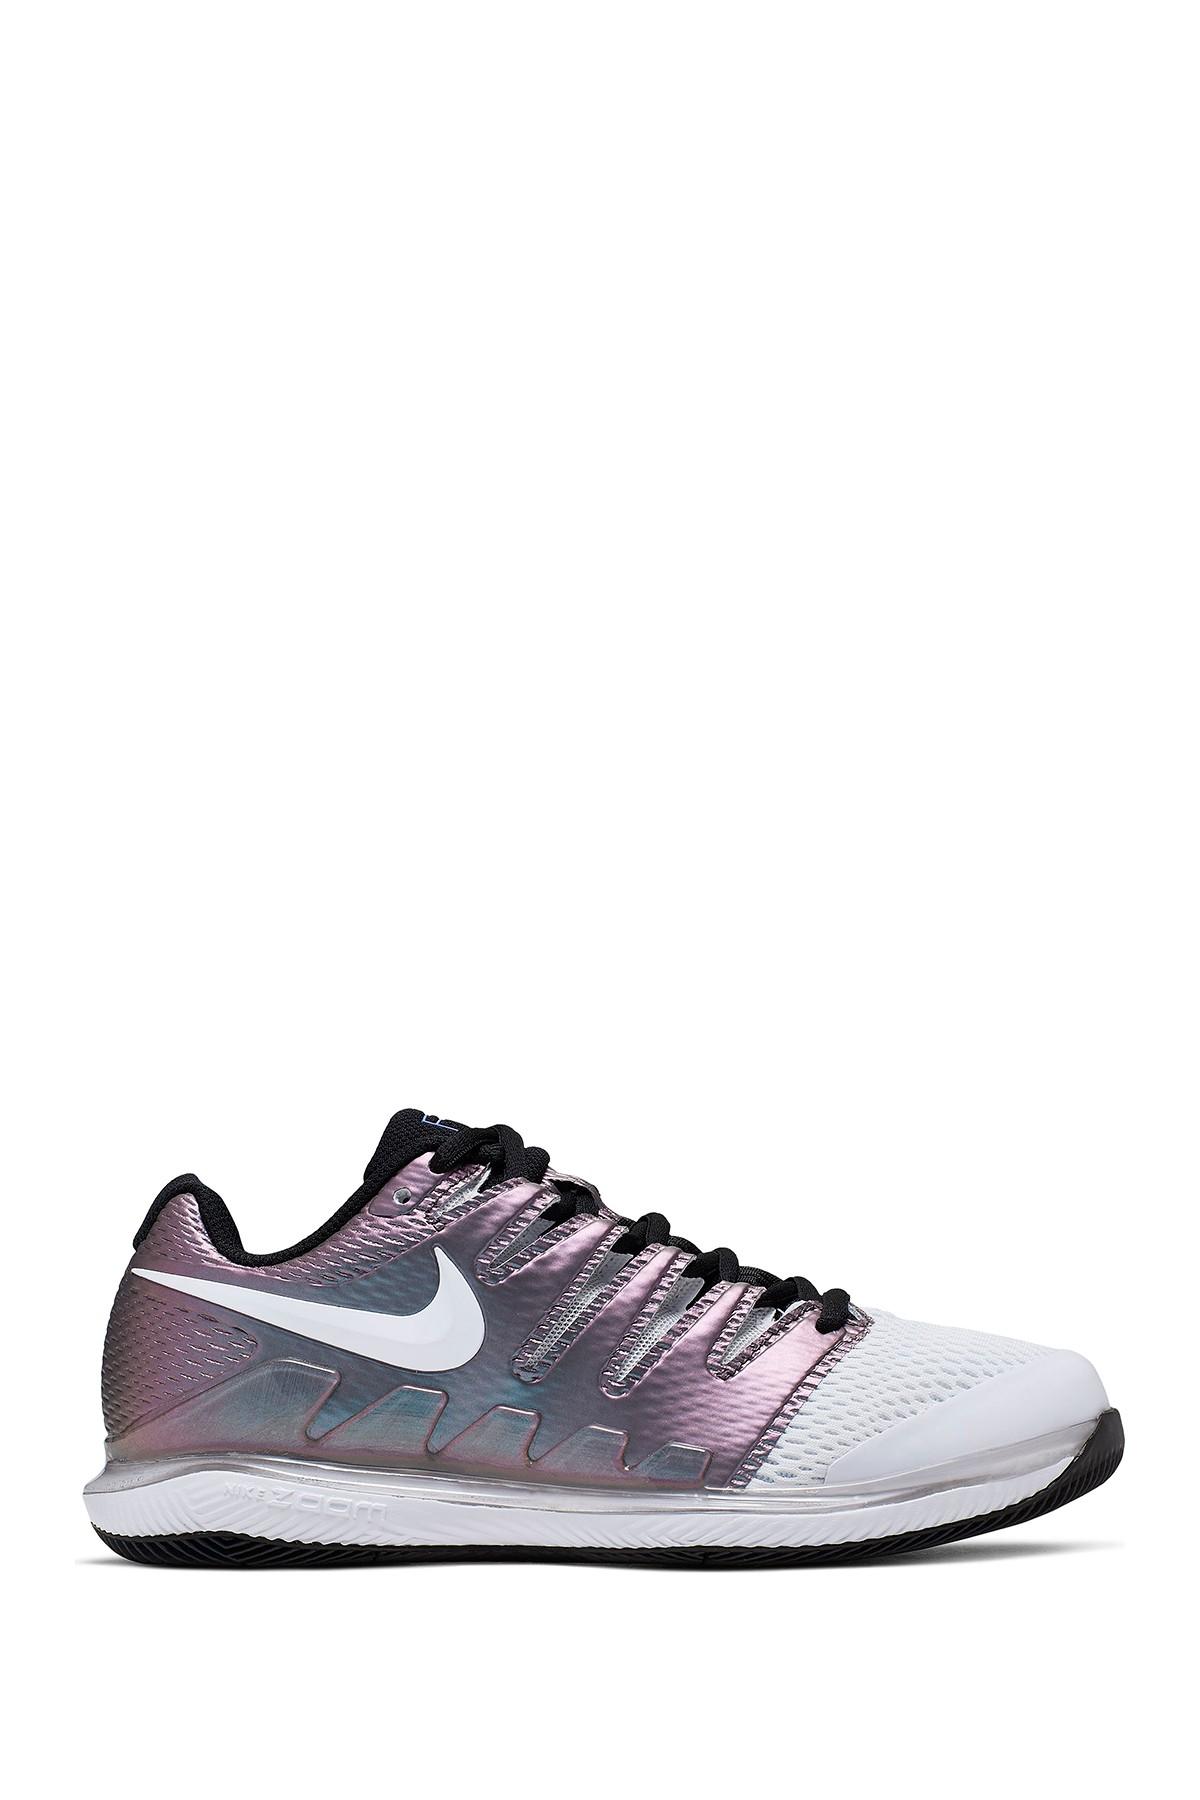 suspicaz Bendecir Roux Nike Air Zoom Vapor X Tennis Shoes | Lyst